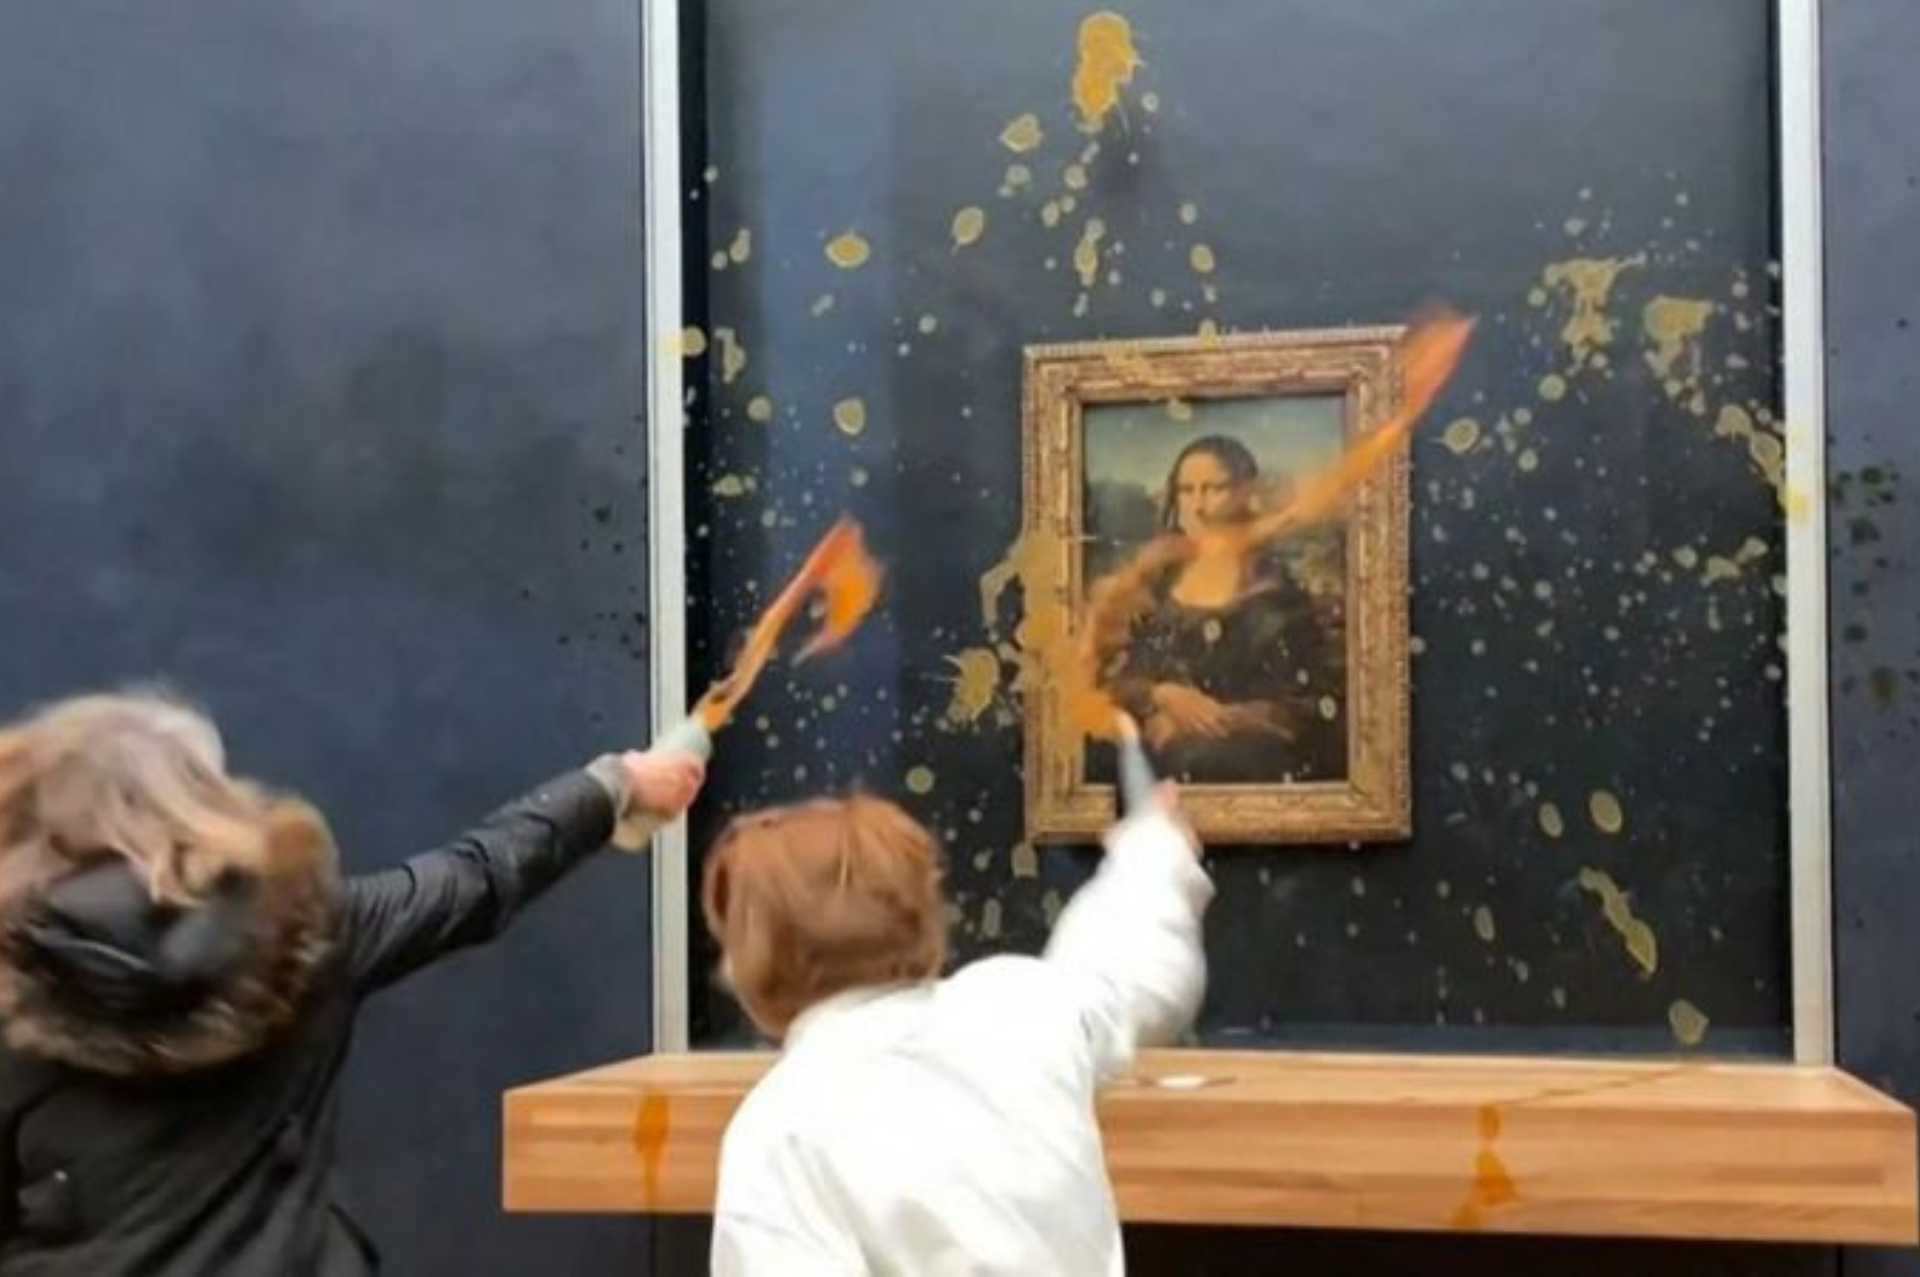 Manifestantes arrojan sopa al cuadro de Mona Lisa en el Louvre